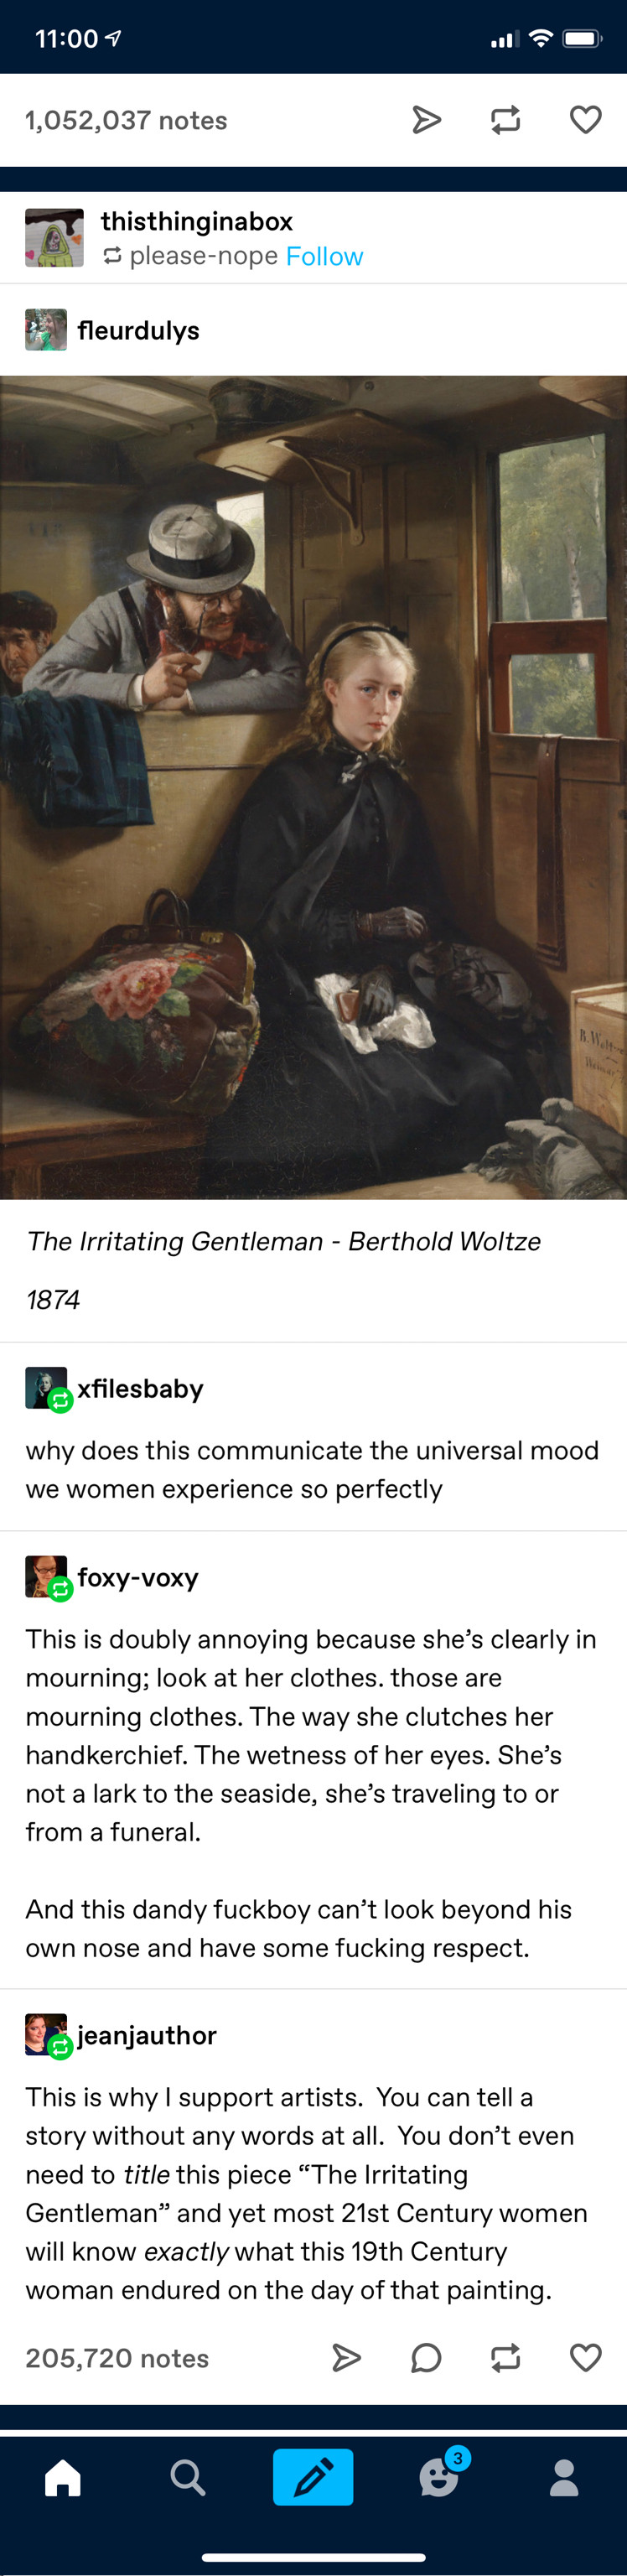 The Irritating Gentleman